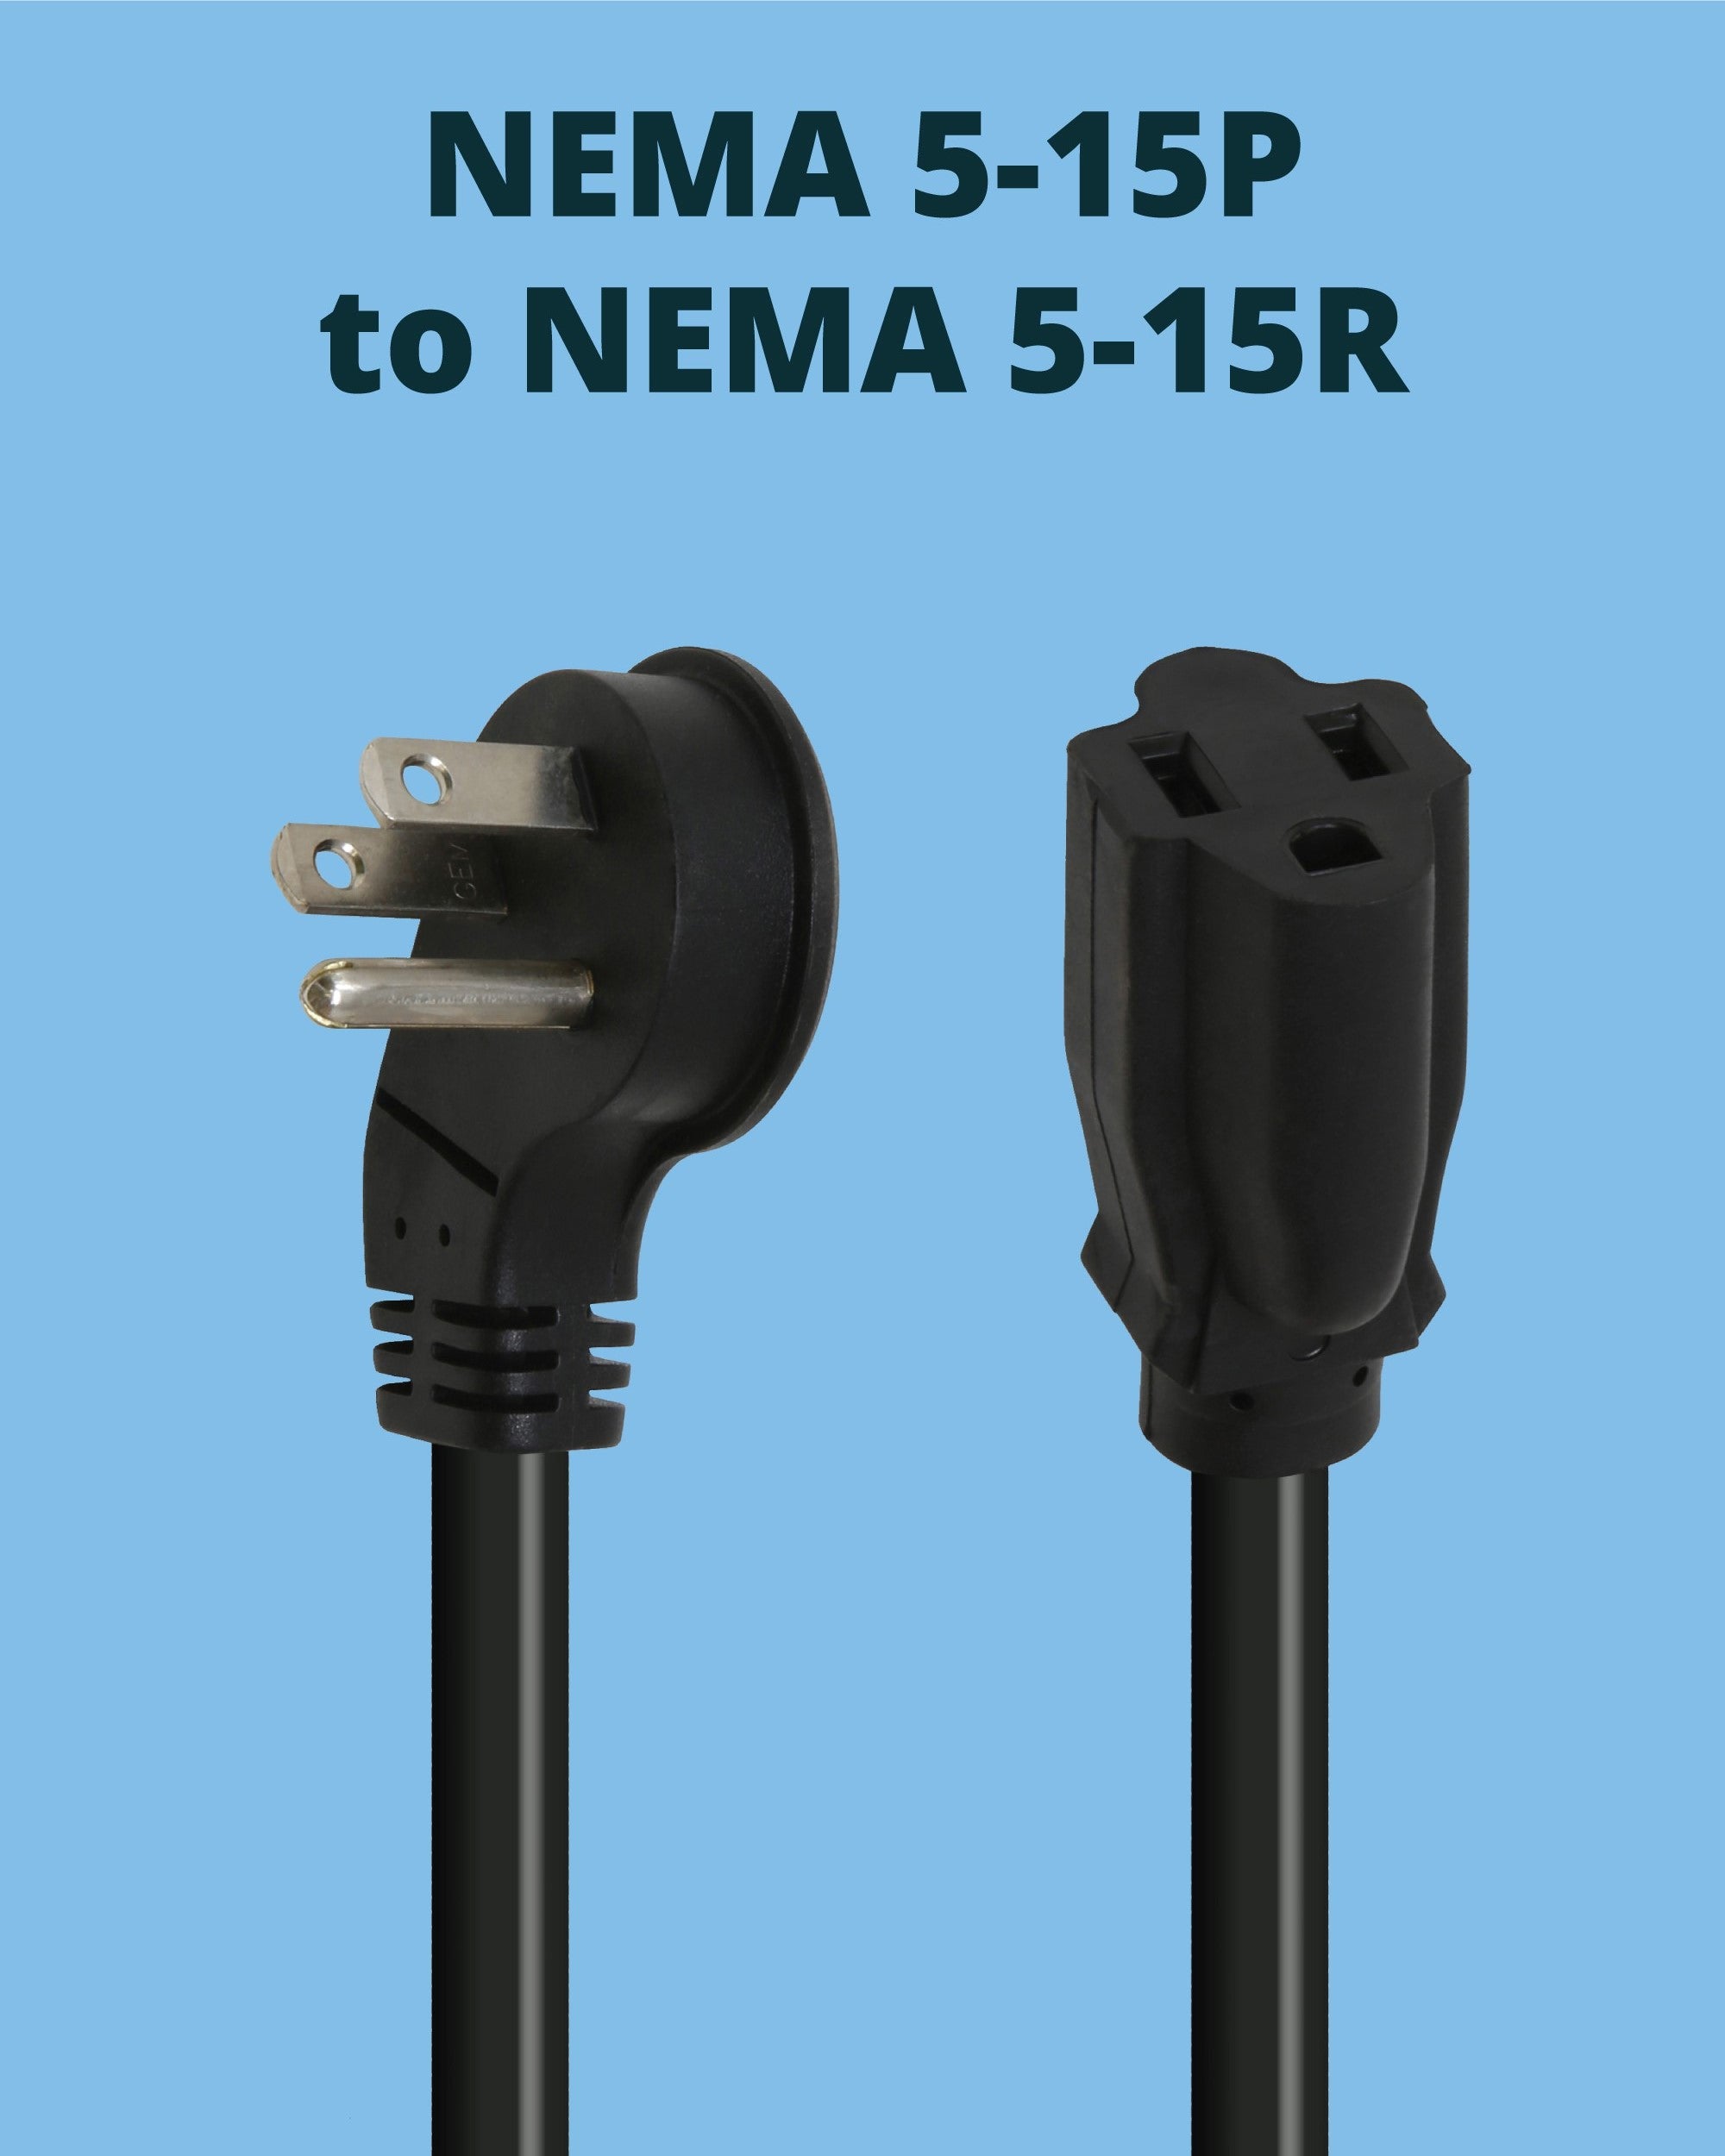 1ft 16 AWG NEMA 5-15P to NEMA 5-15R Outlet Saver Power Extension